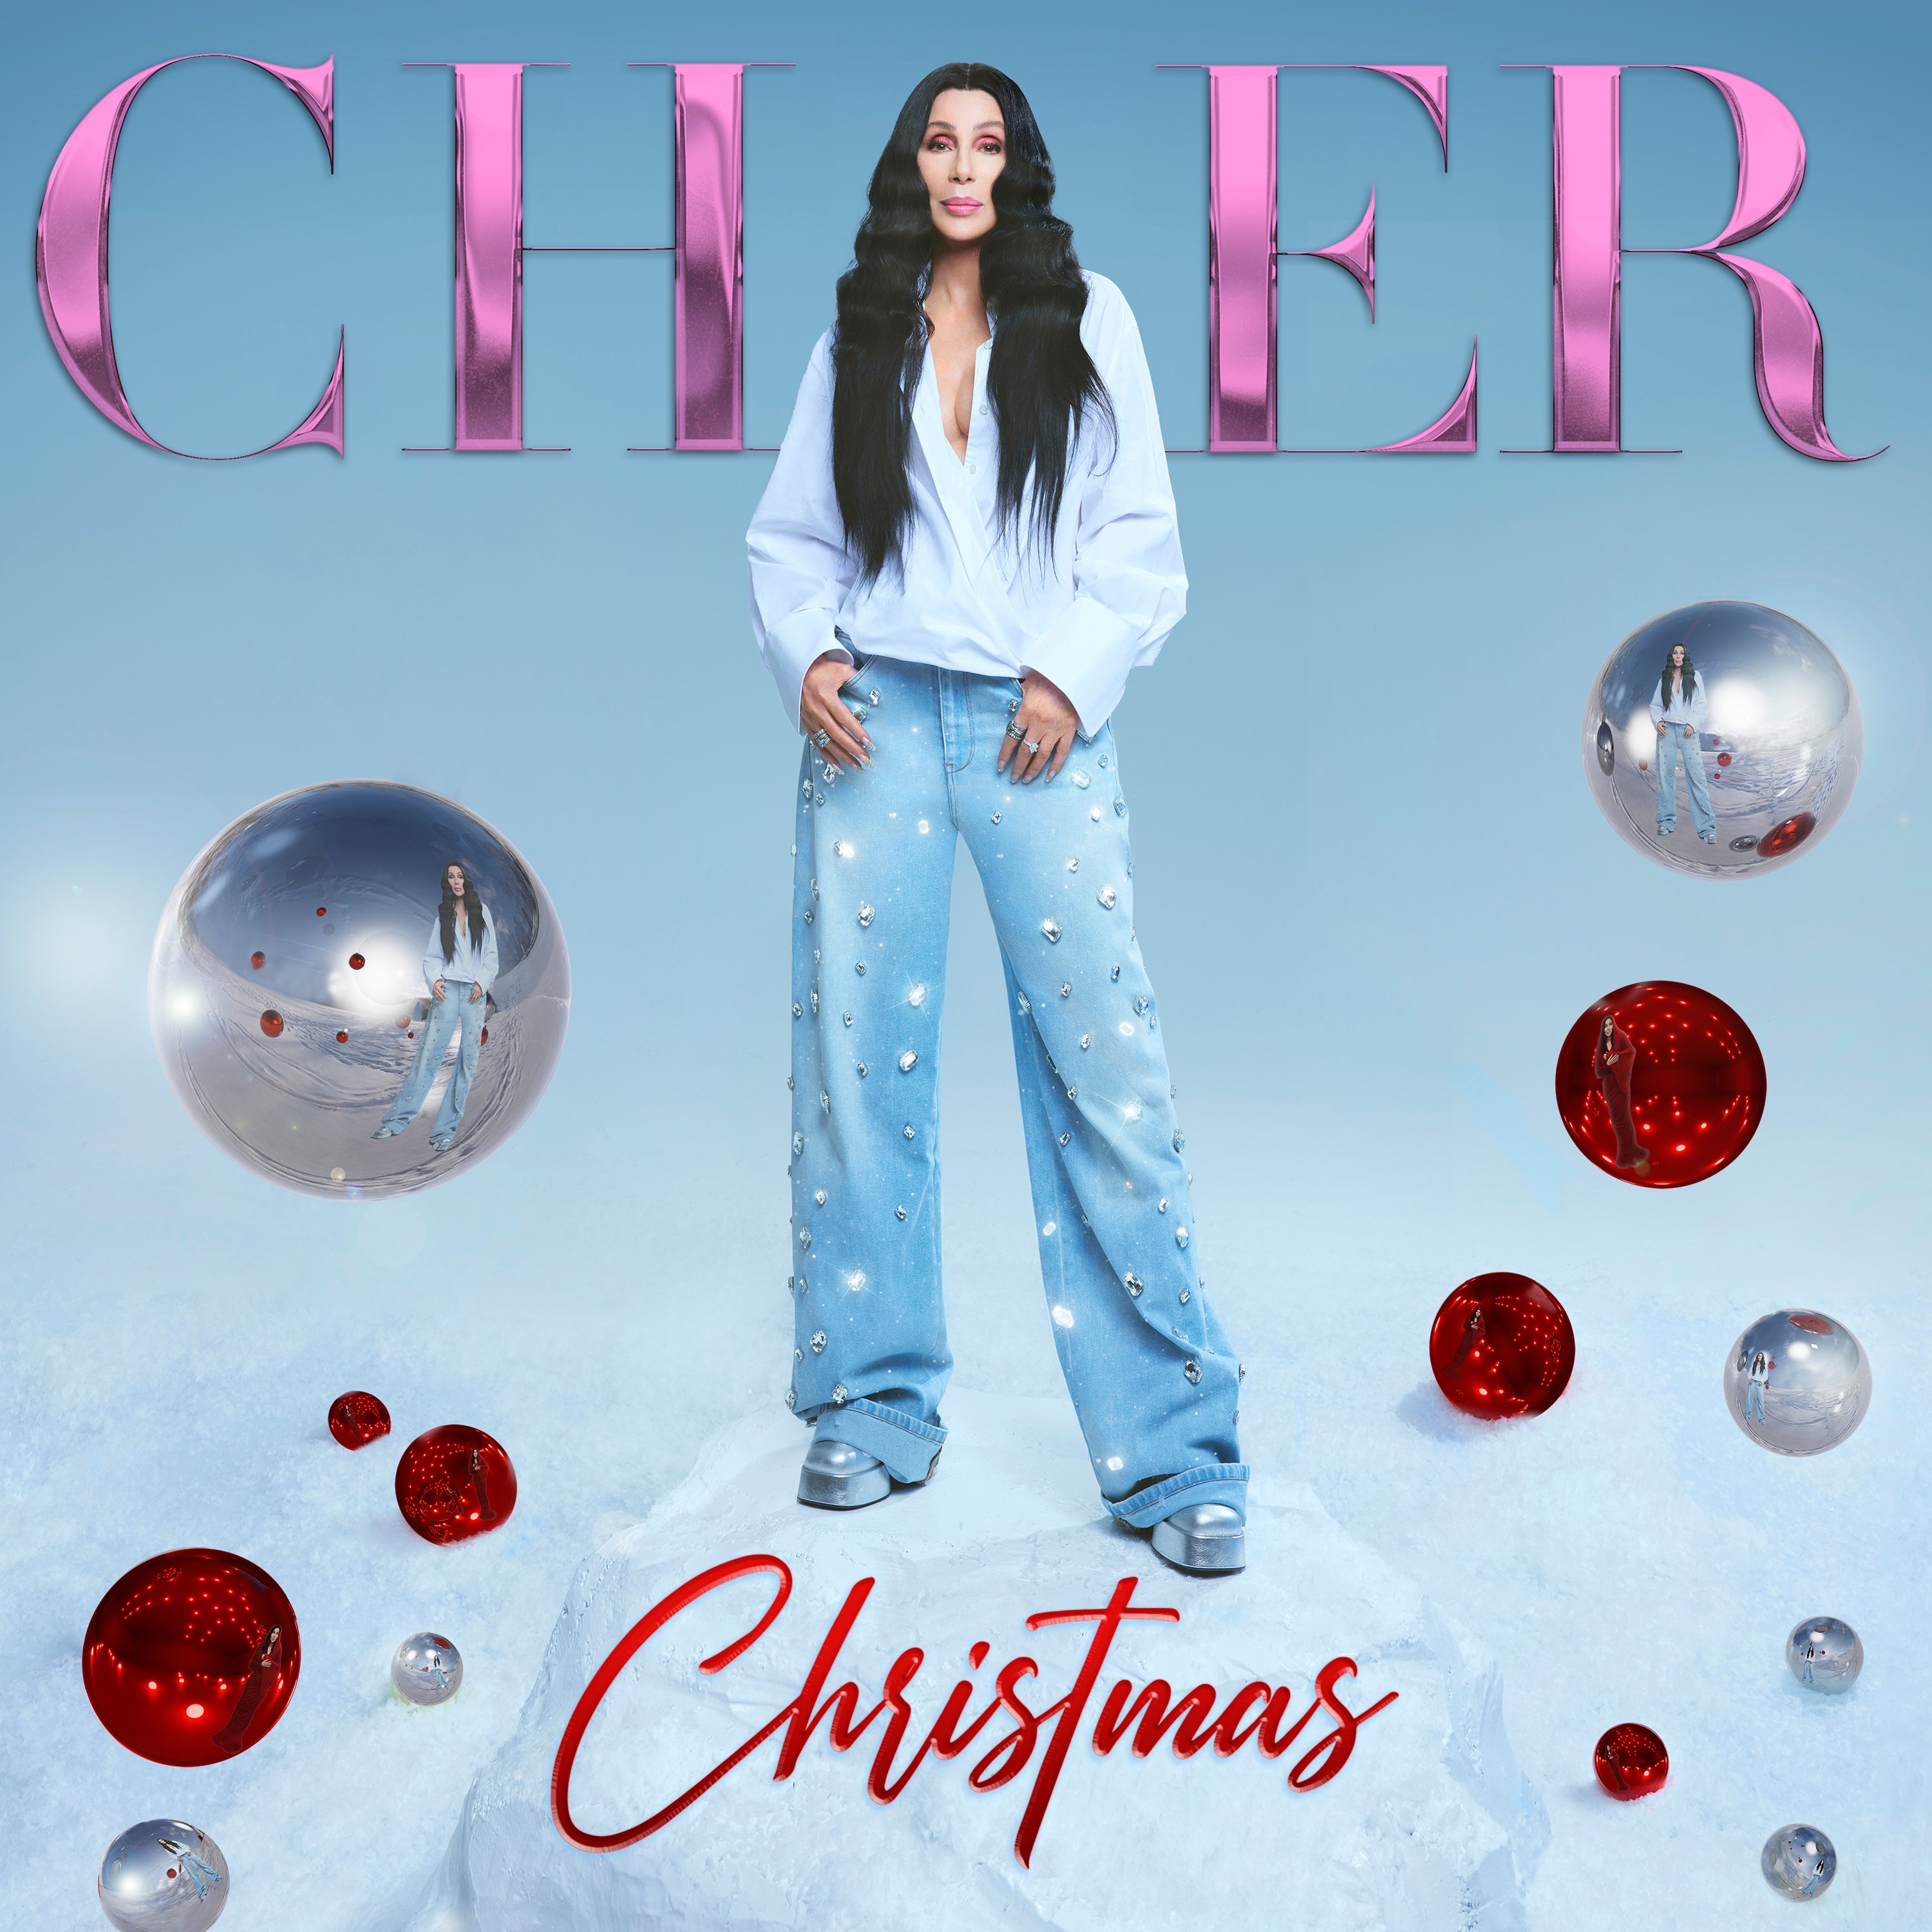 Christmas (CD Cover Rosa - Esclusiva WMI)